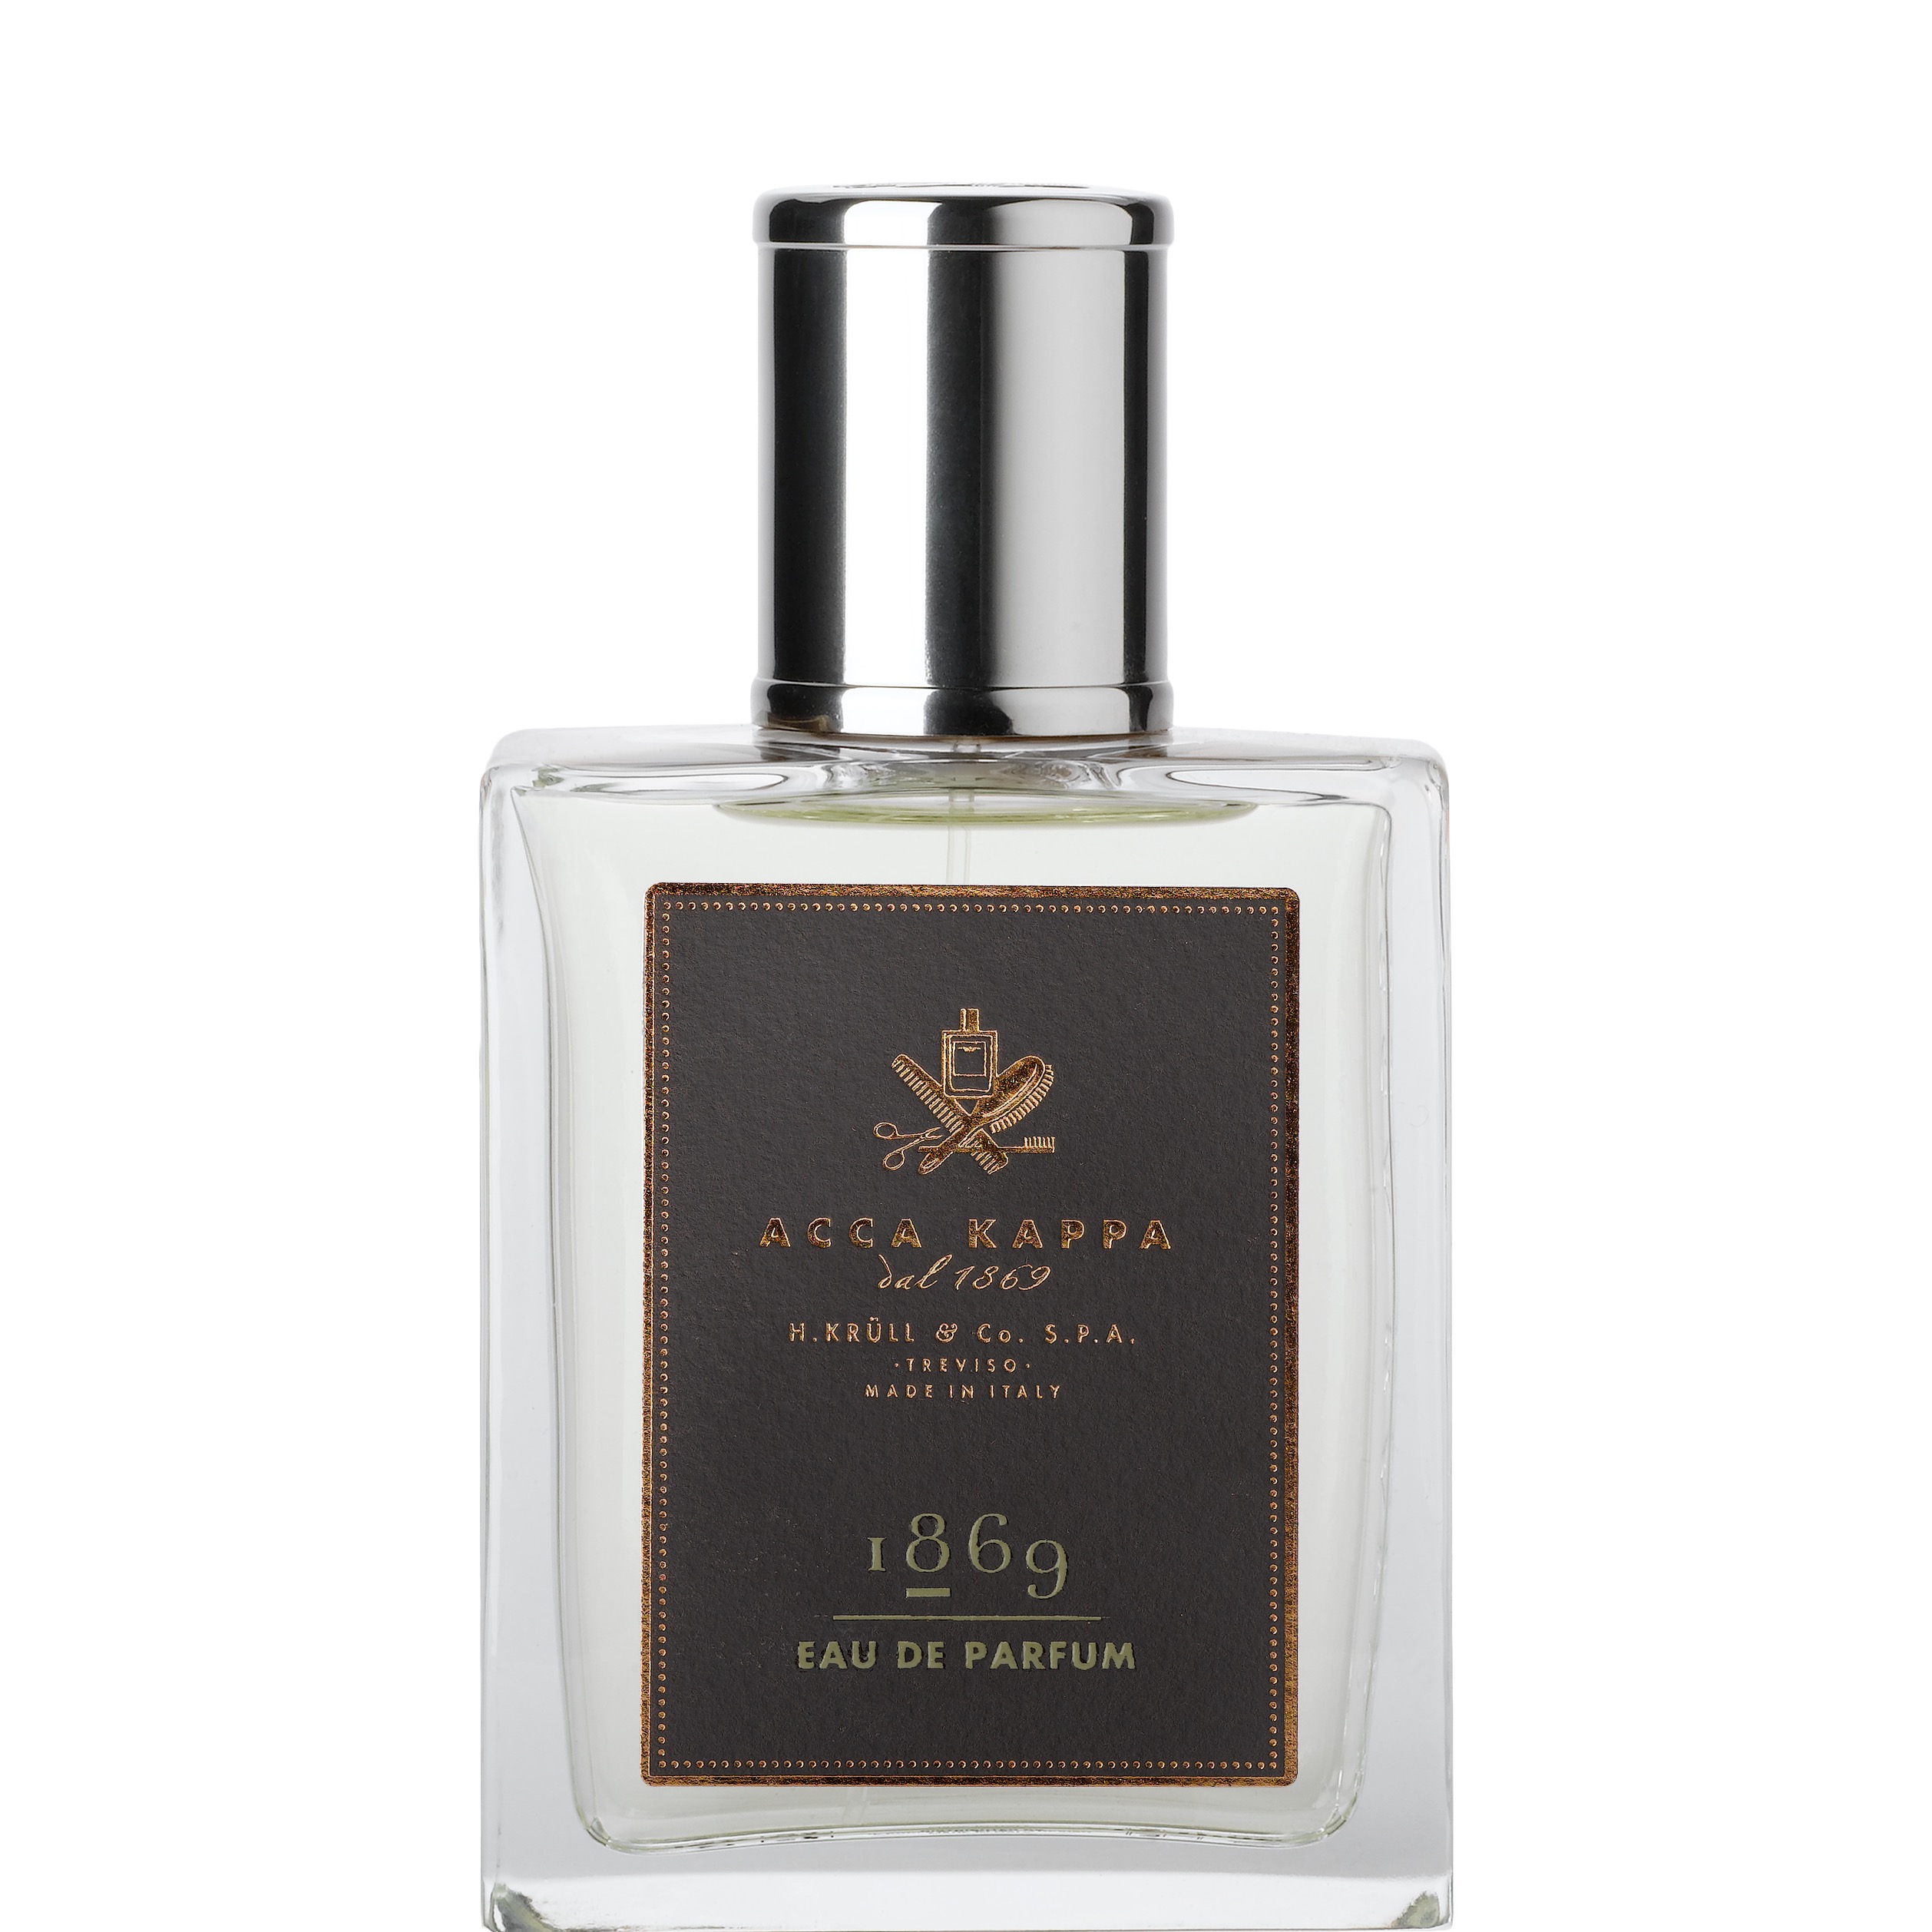 Acca Kappa Eau de Parfum 1869 - 1.1 - AC-3412